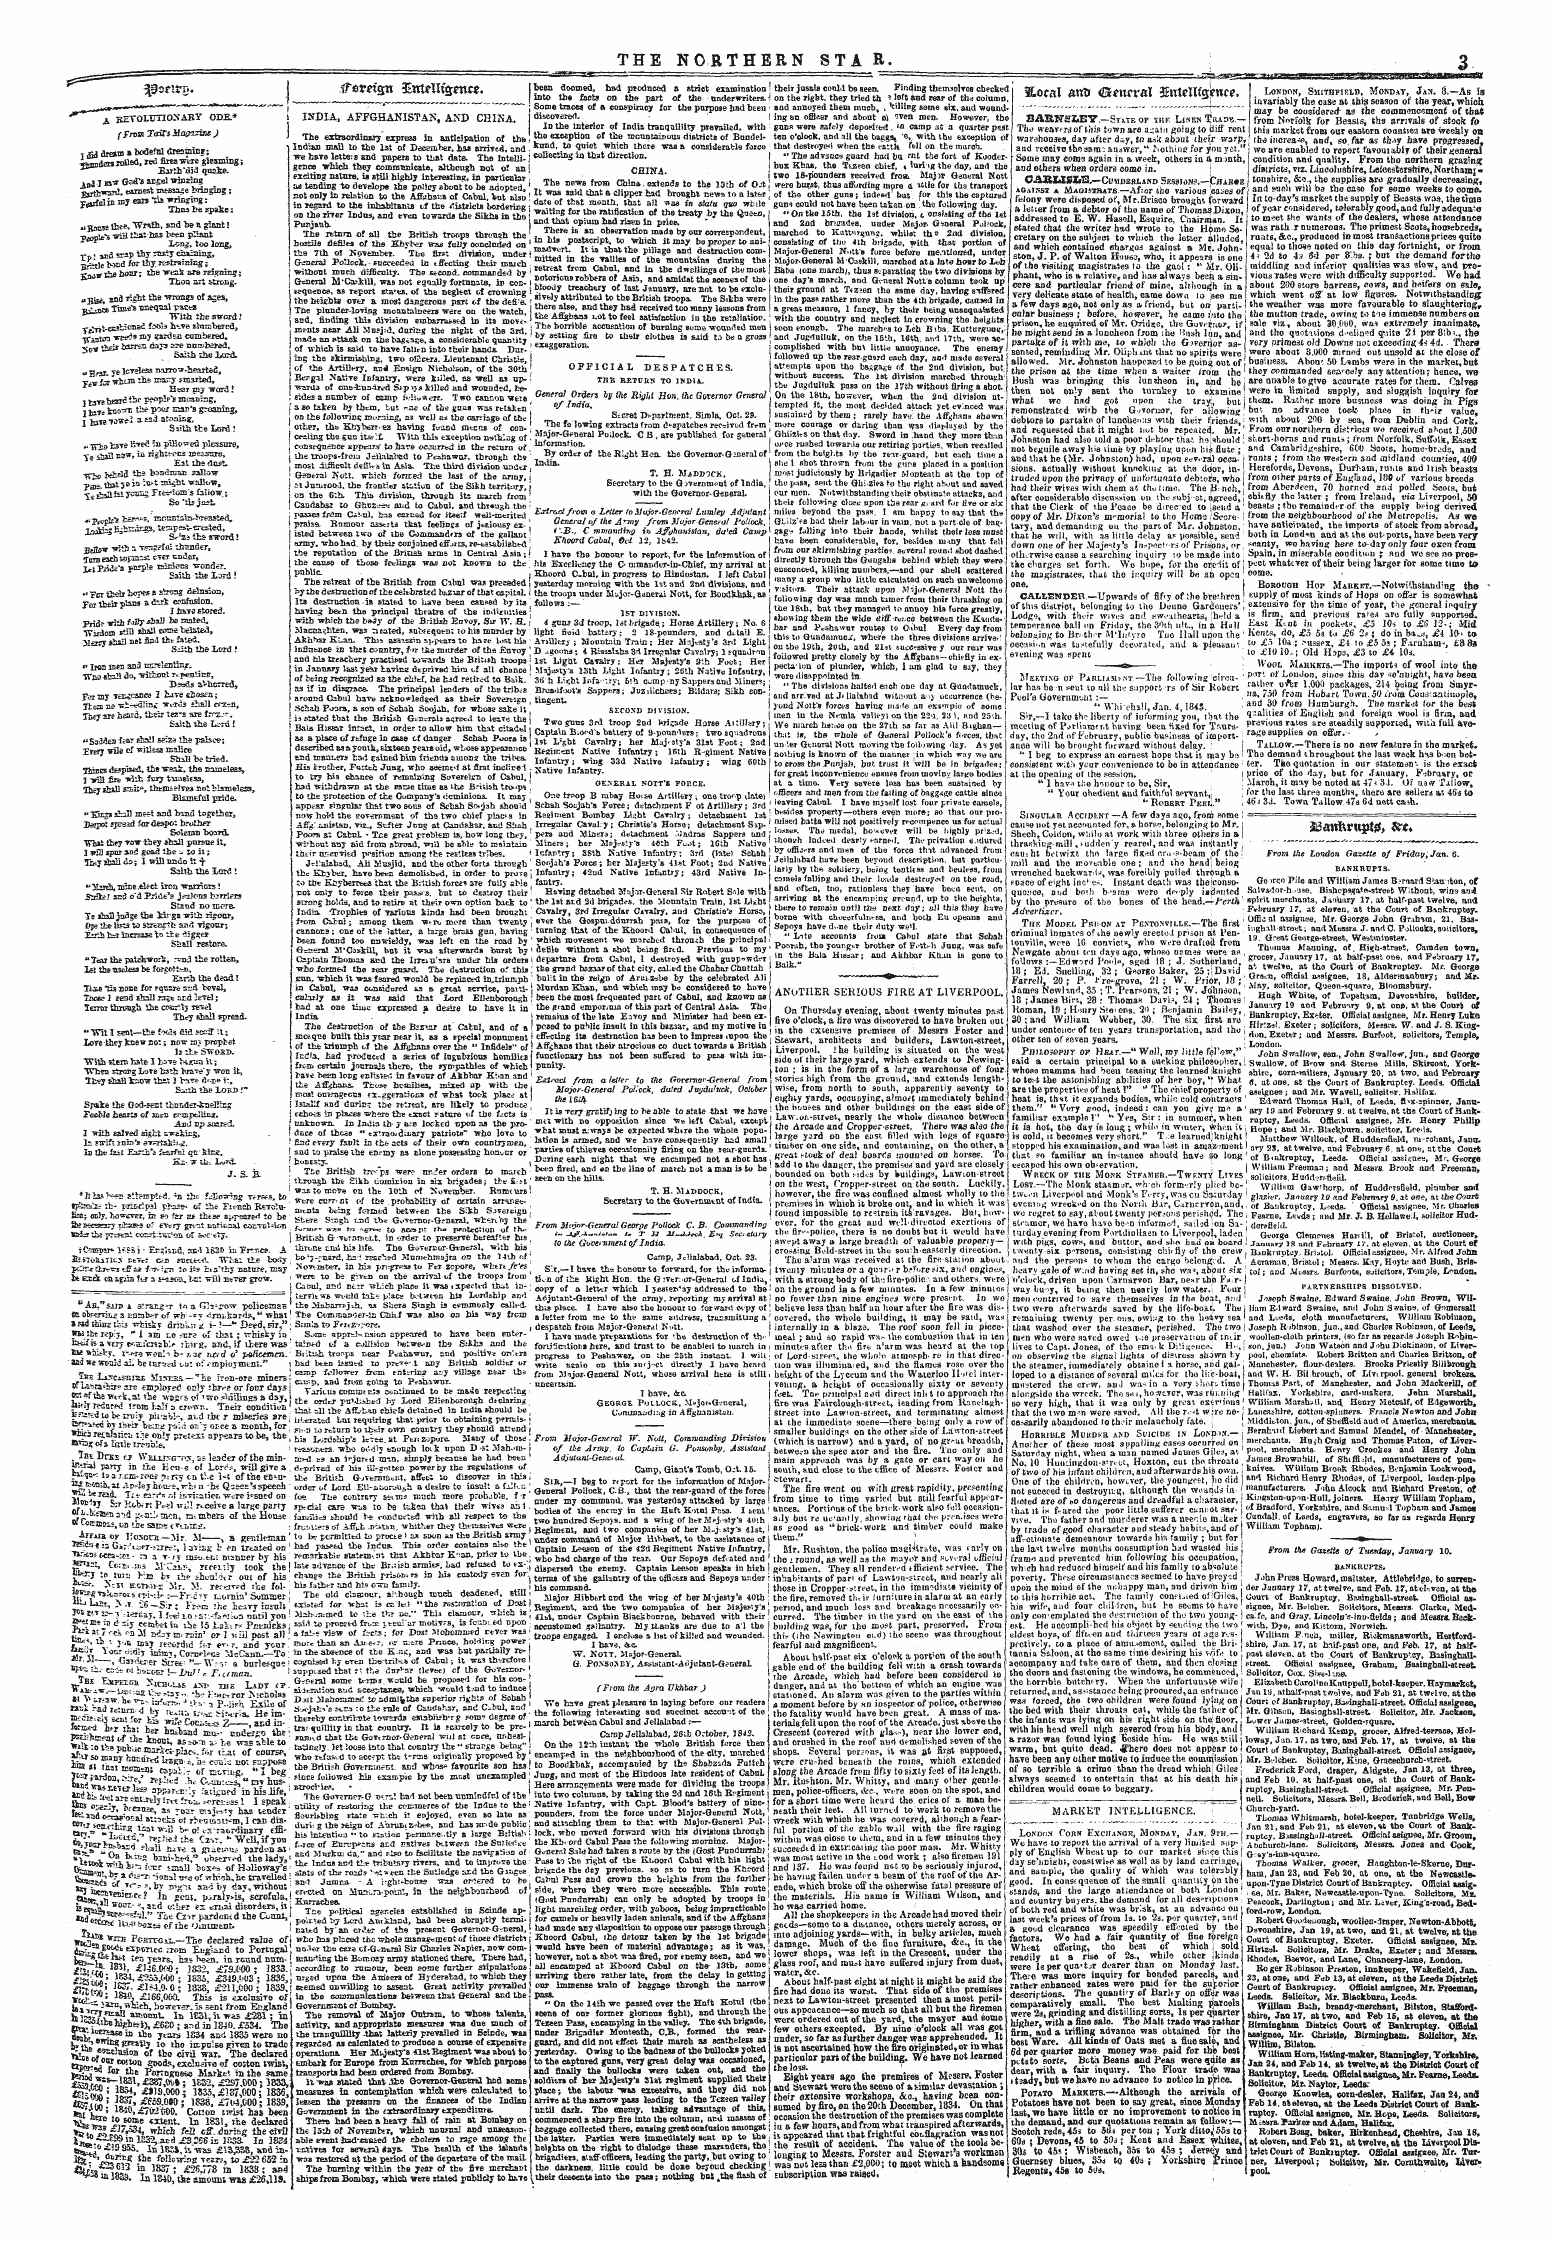 Northern Star (1837-1852): jS F Y, 4th edition - Frorn_N 3tntexit_Rnt«